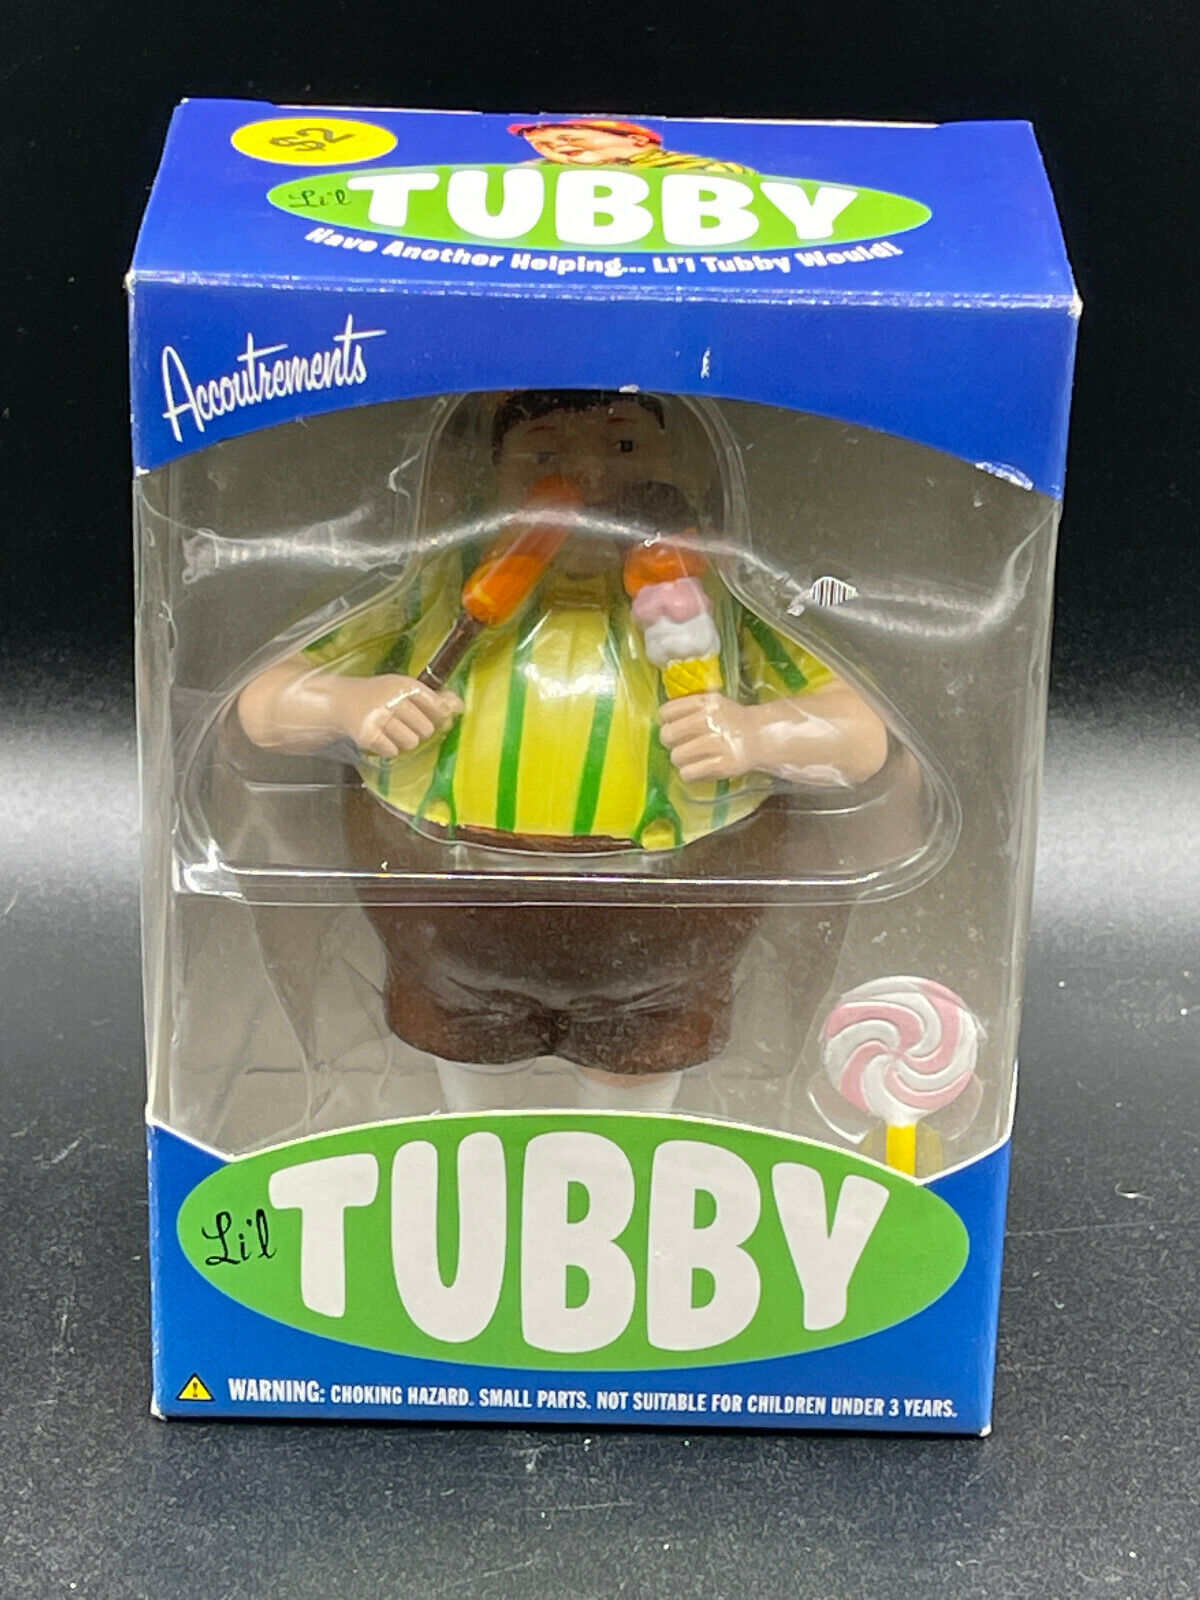 Accoutrements Li'l Tubby Vinyl Toy Figure Collectible RARE MIB